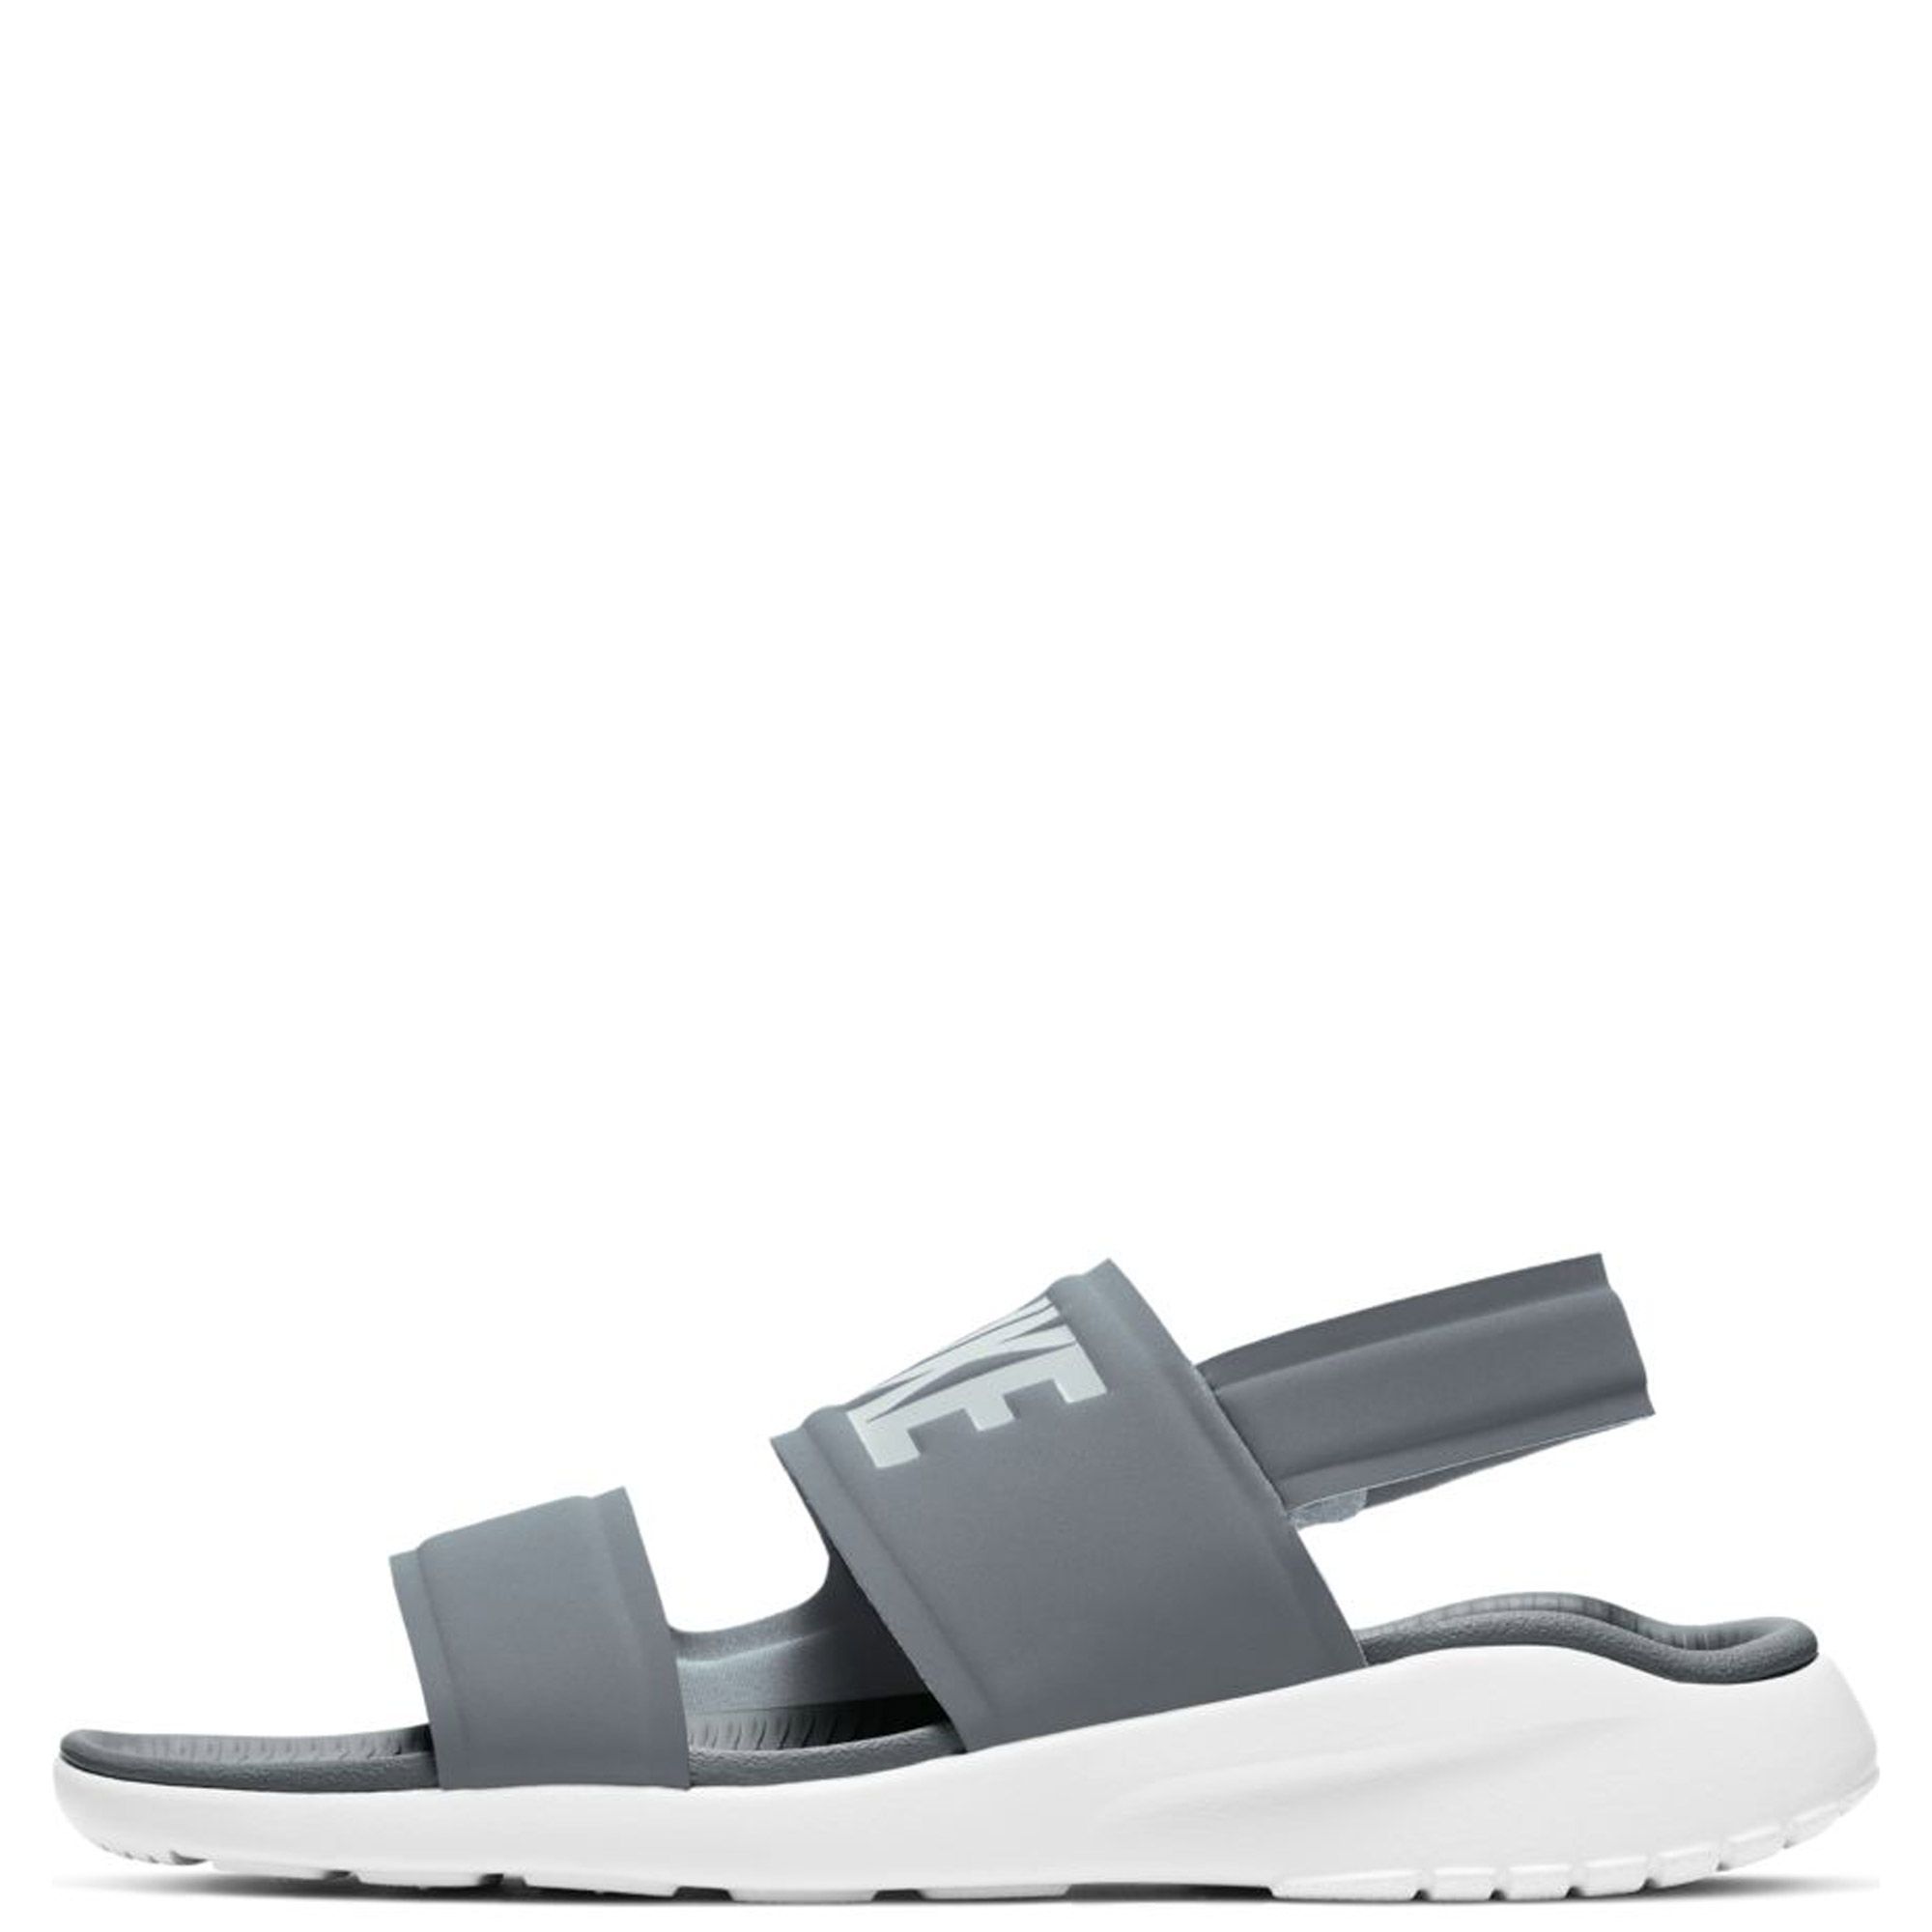 white tanjun sandals